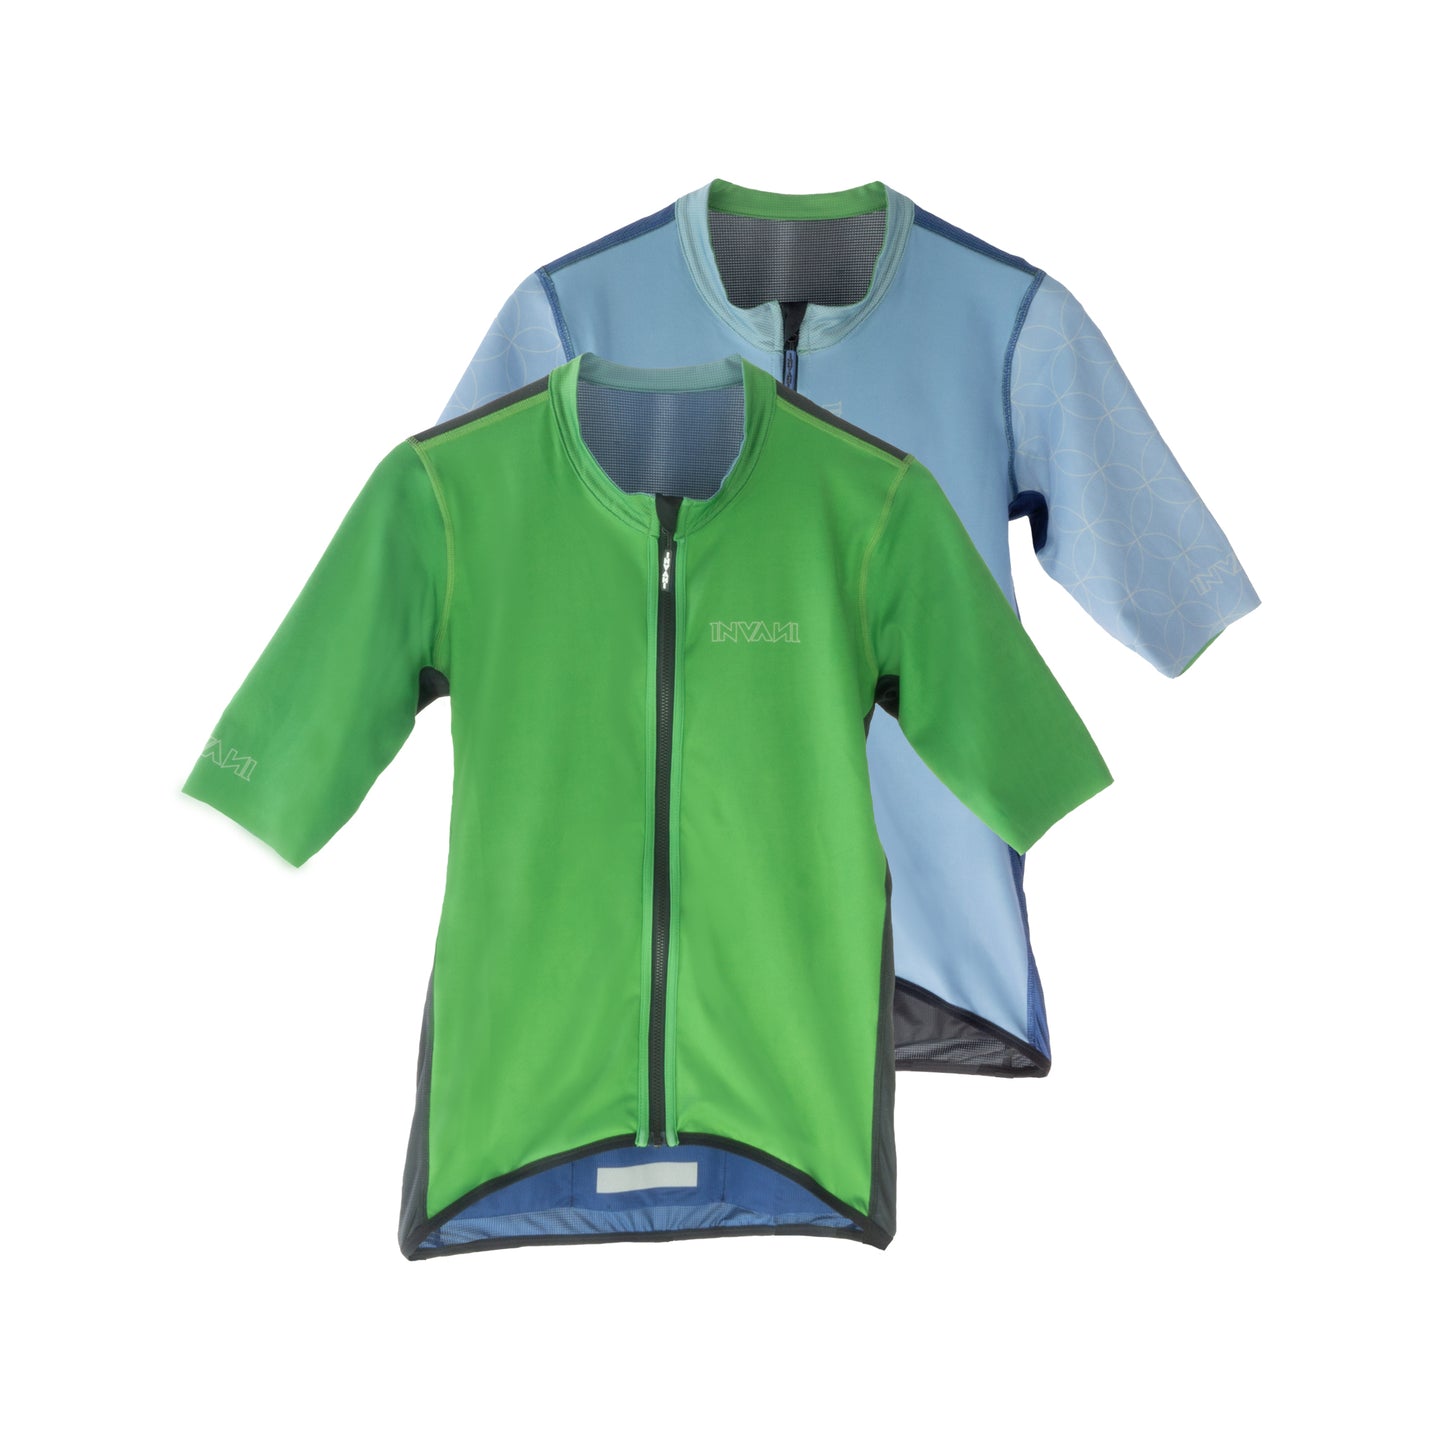 Slim Fit Reversible Jersey: Green / Light Blue (Men's)